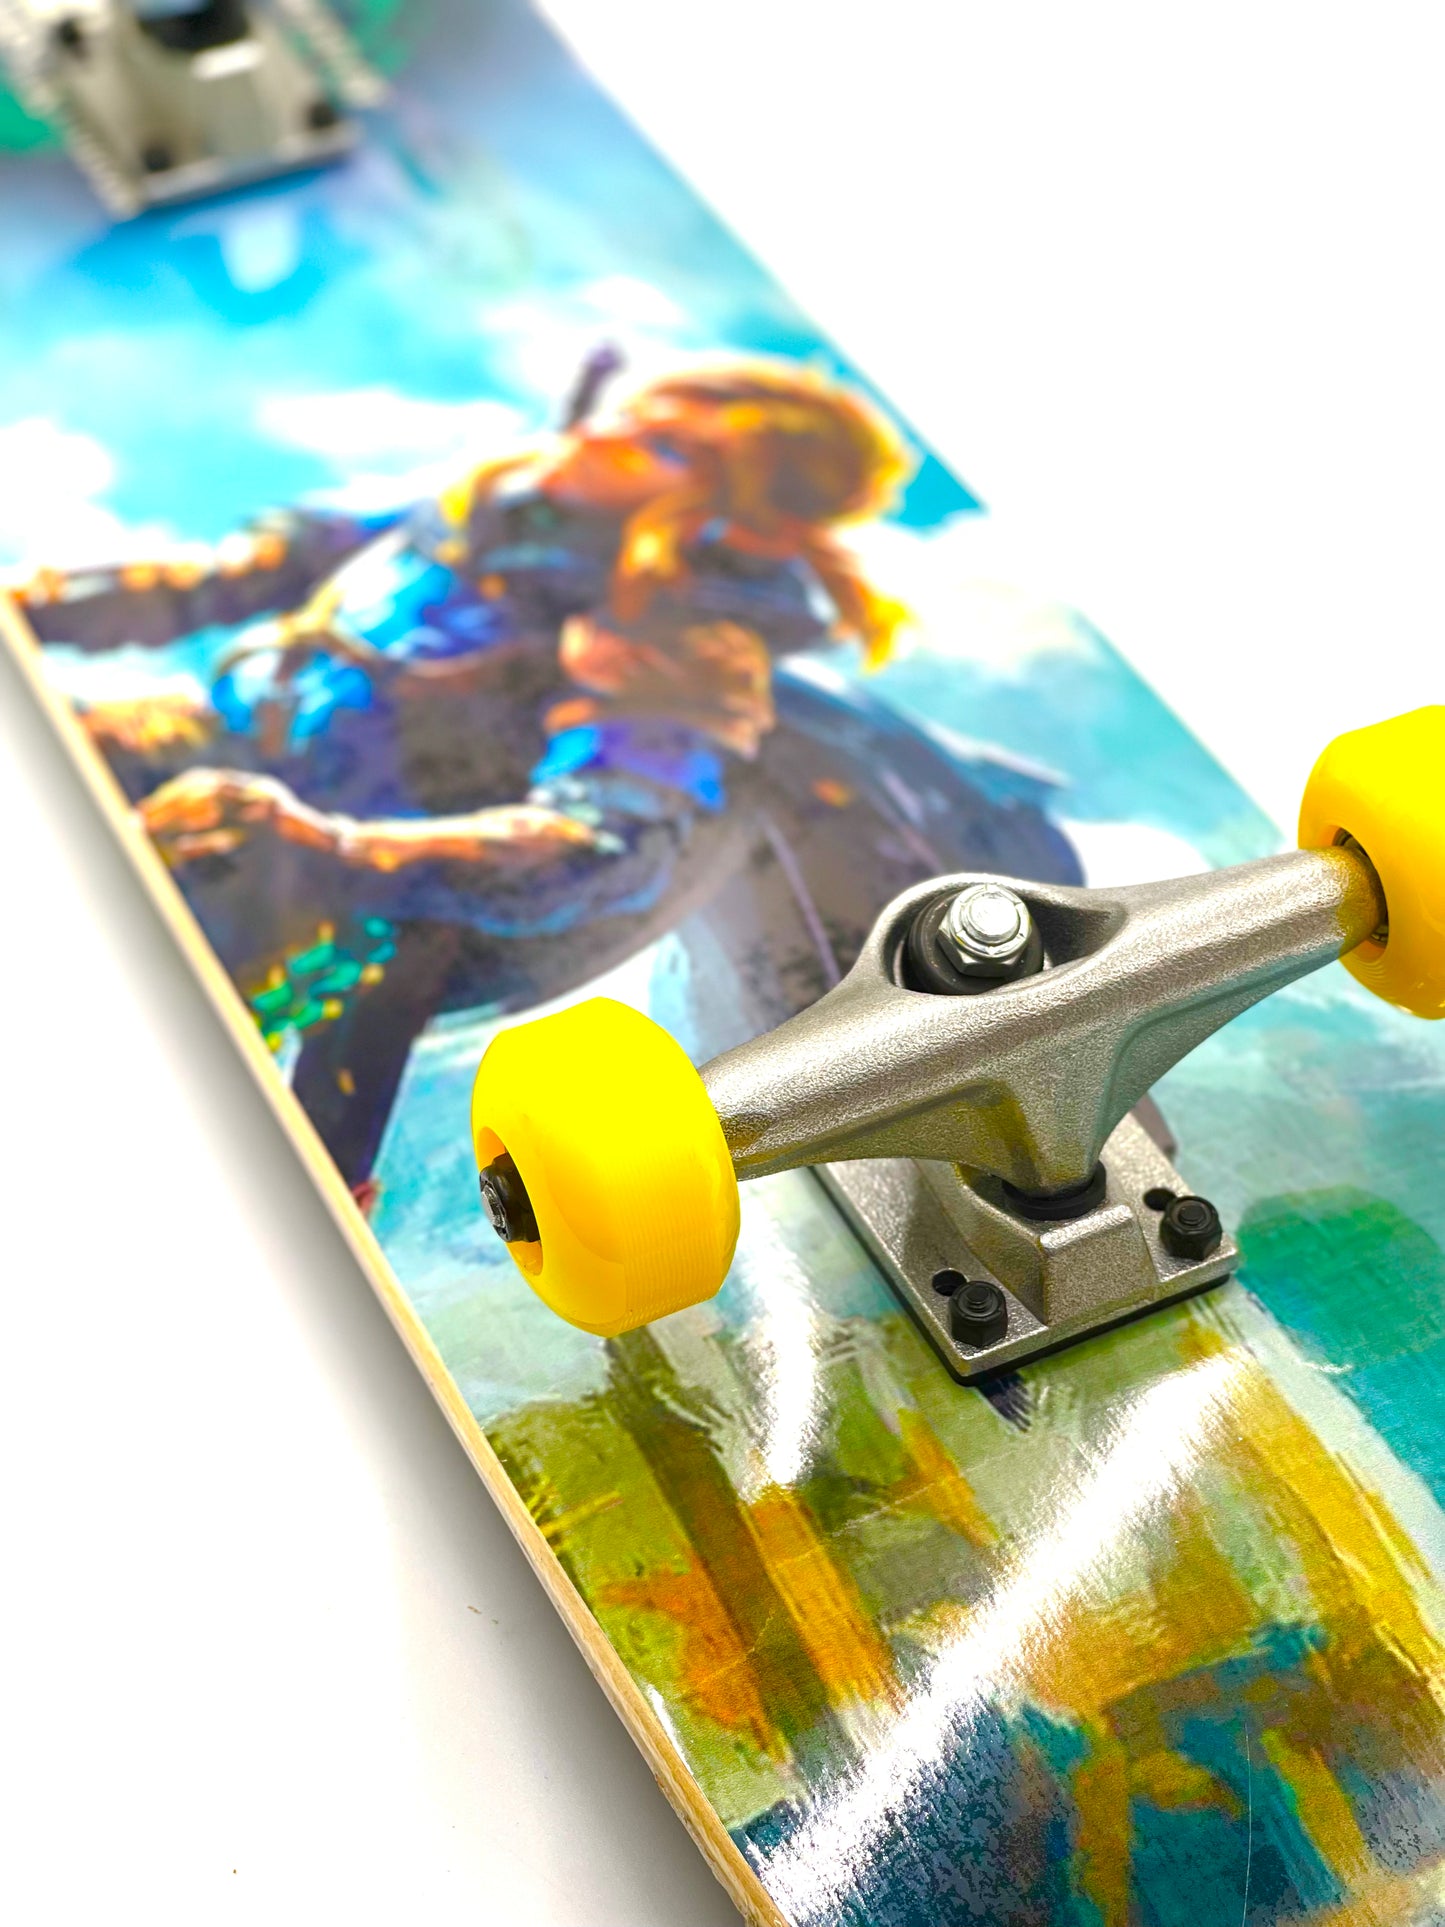 Legend of Zelda New Adventure Skateboard